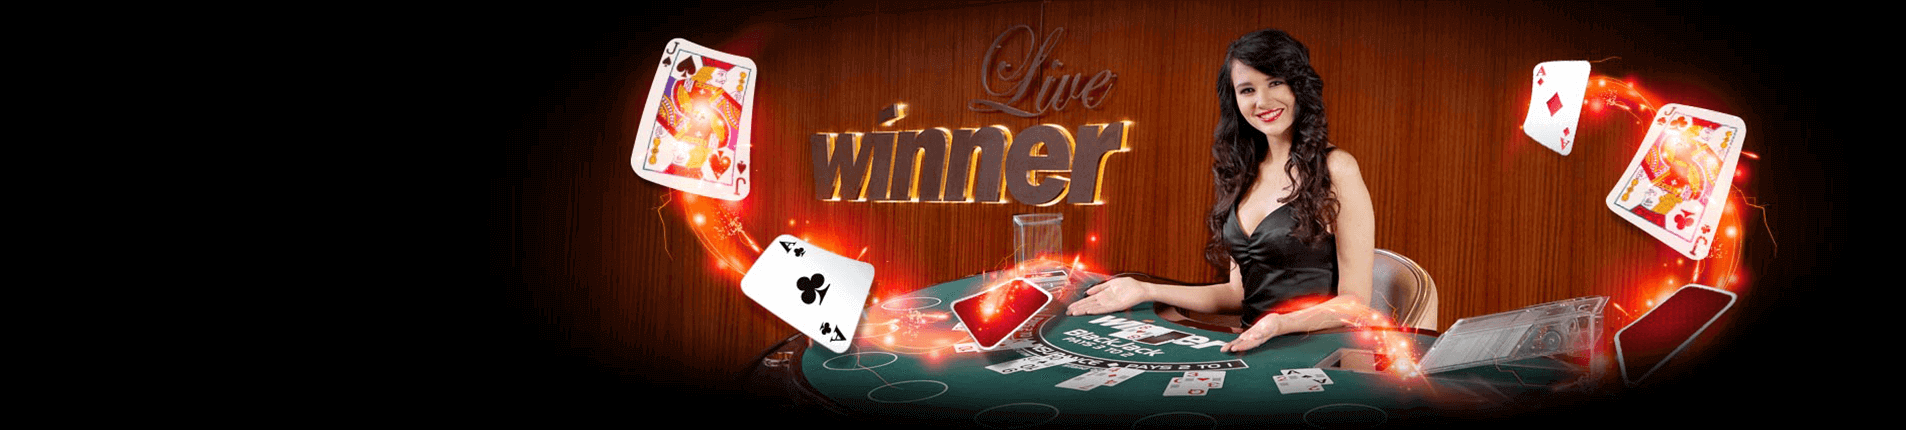 winner online casino